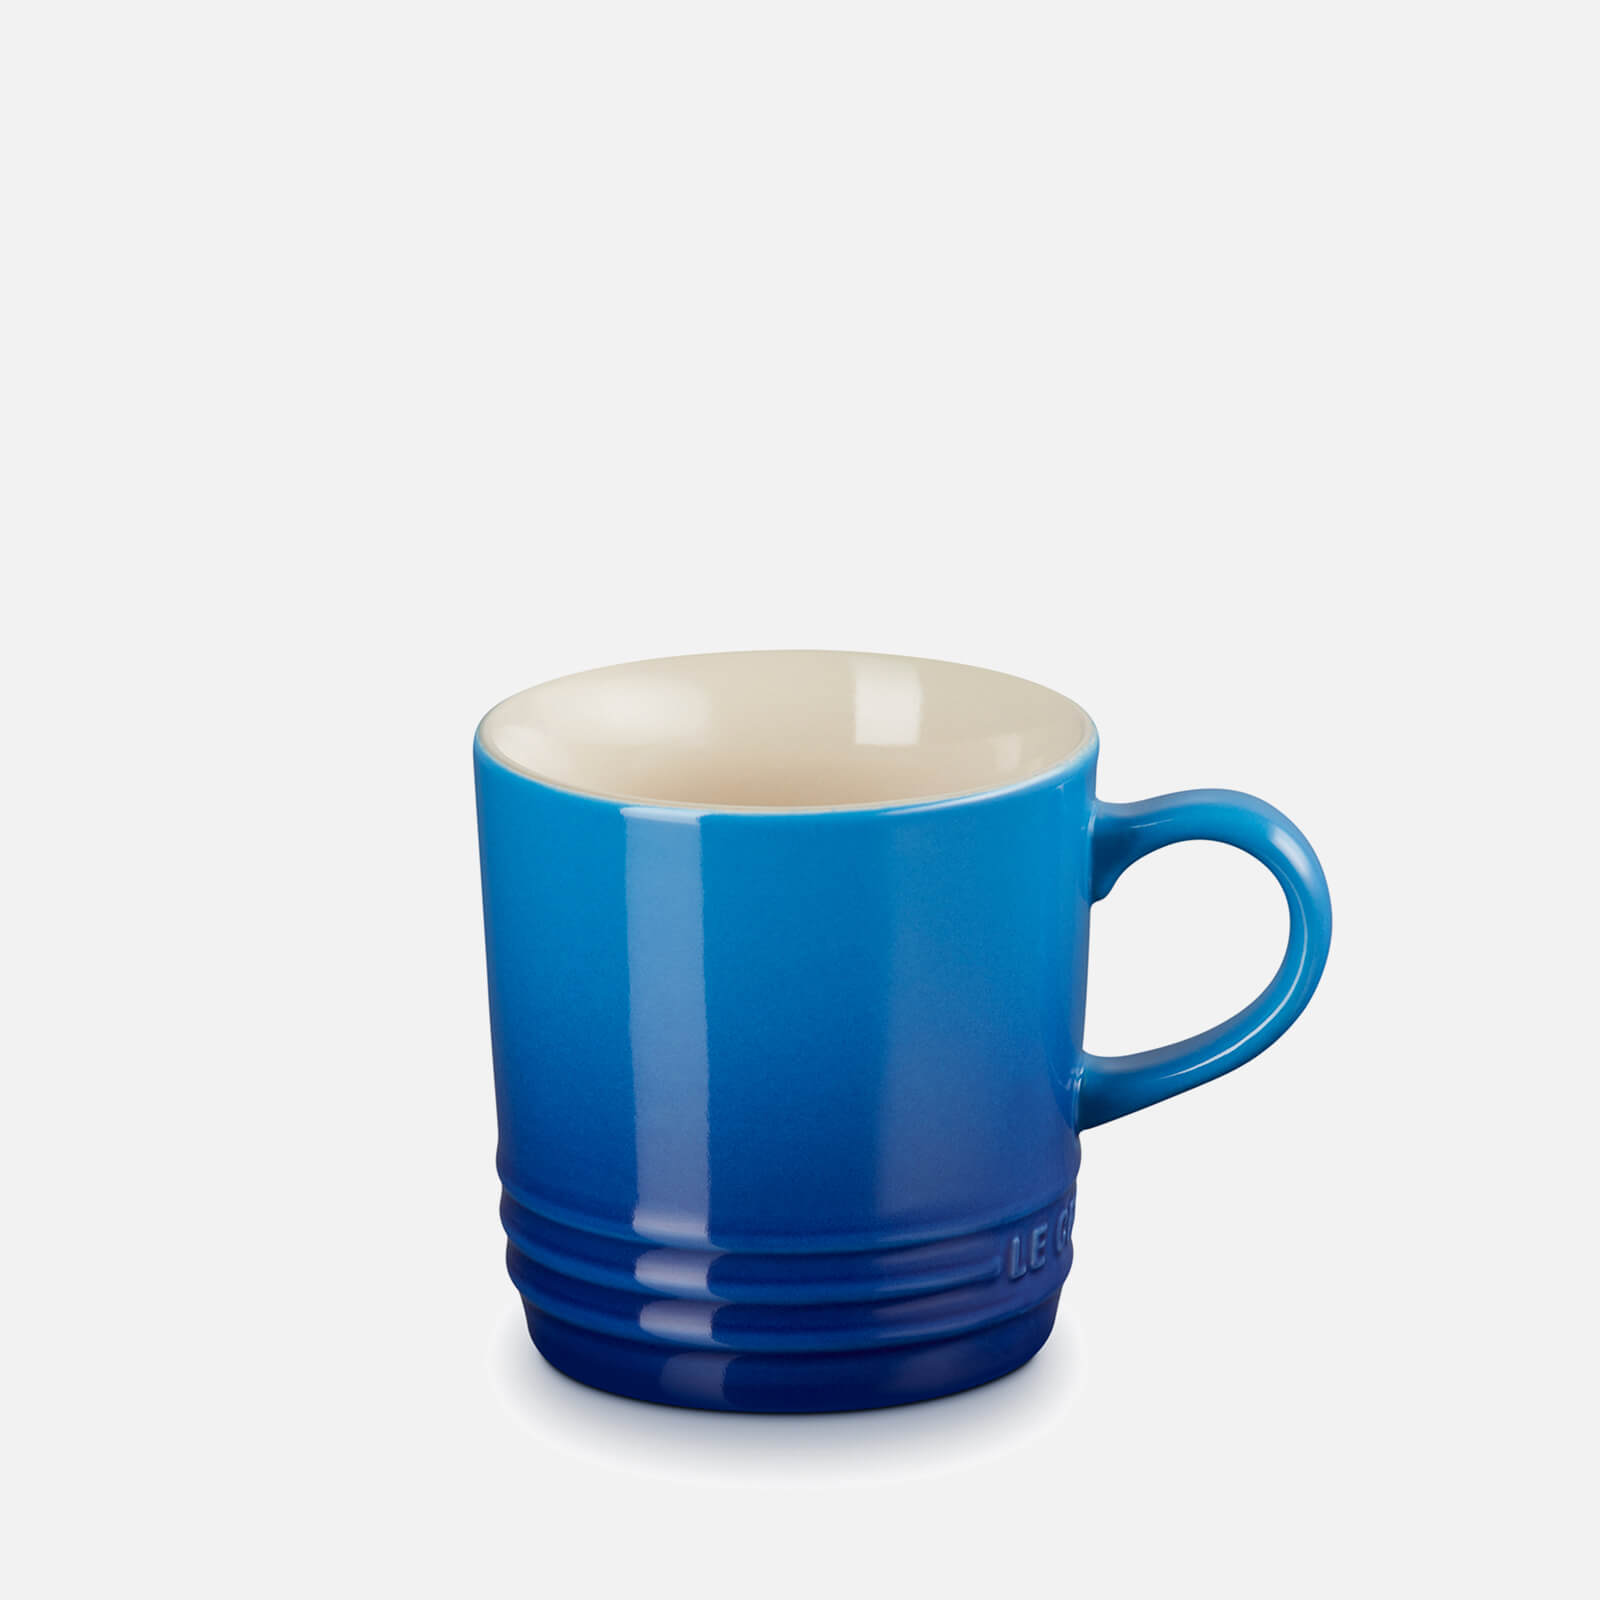 Le Creuset Stoneware Cappuccino Mug - 200ml - Azure Blue von Le Creuset